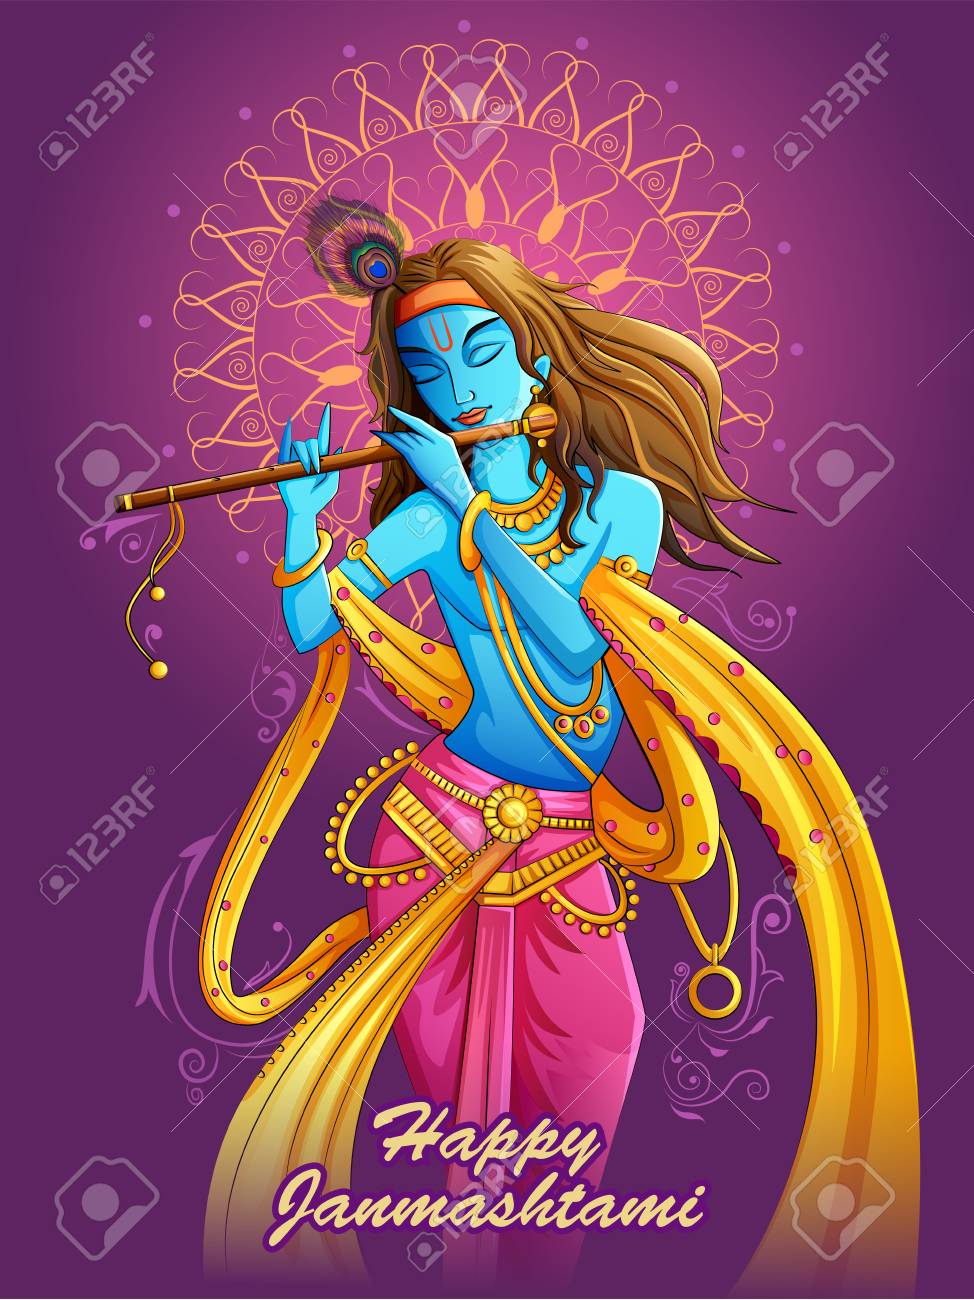 Lord Krishna Playing Bansuri Flute On Happy Janmashtami Holiday